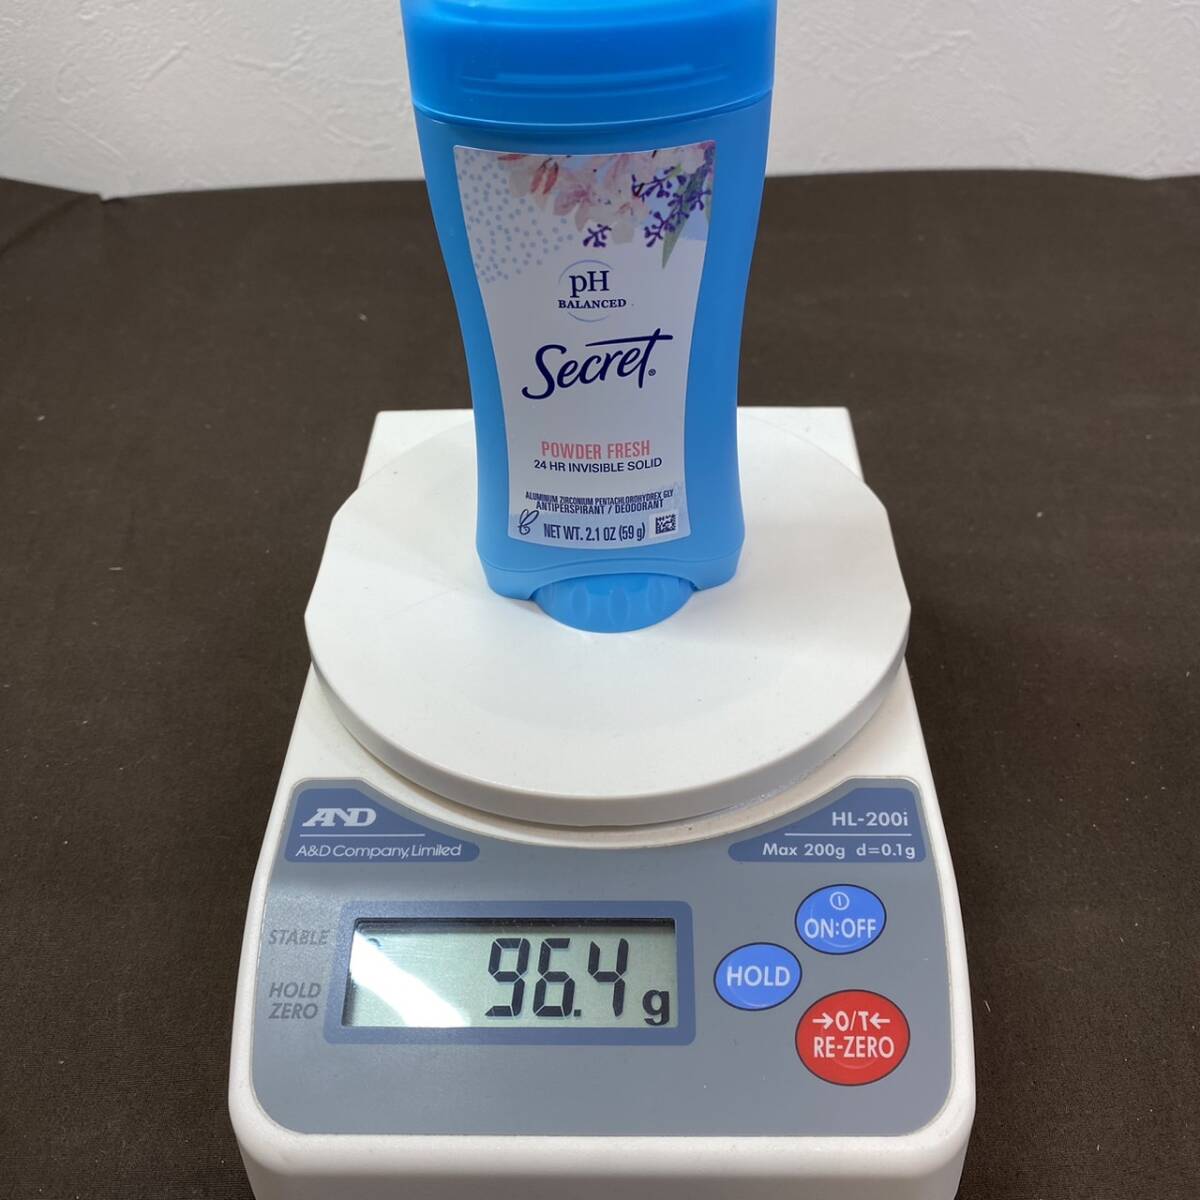 [MH-6481] used beautiful goods Secret Secret powder fresh 5 pcs set abroad deodorant 